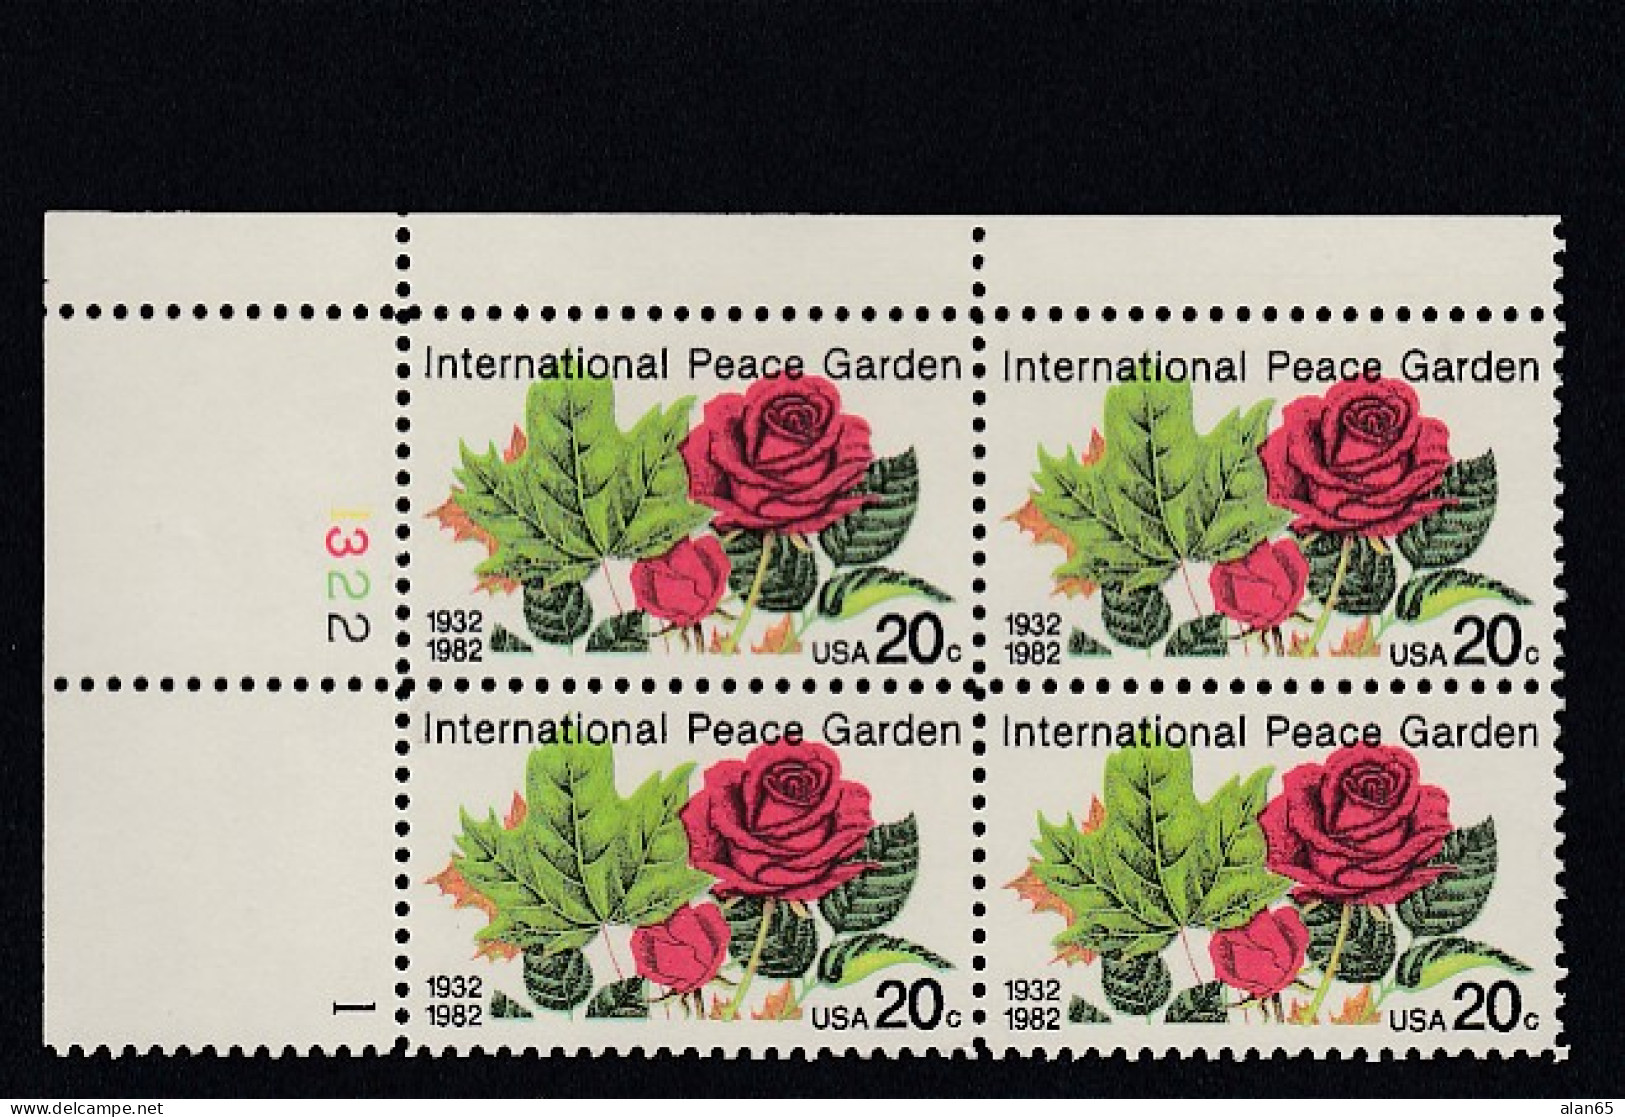 Sc#2014, Plate # Block Of 4 20-cent, International Peace Garden, Flowers Rose, US Postage Stamps - Plattennummern